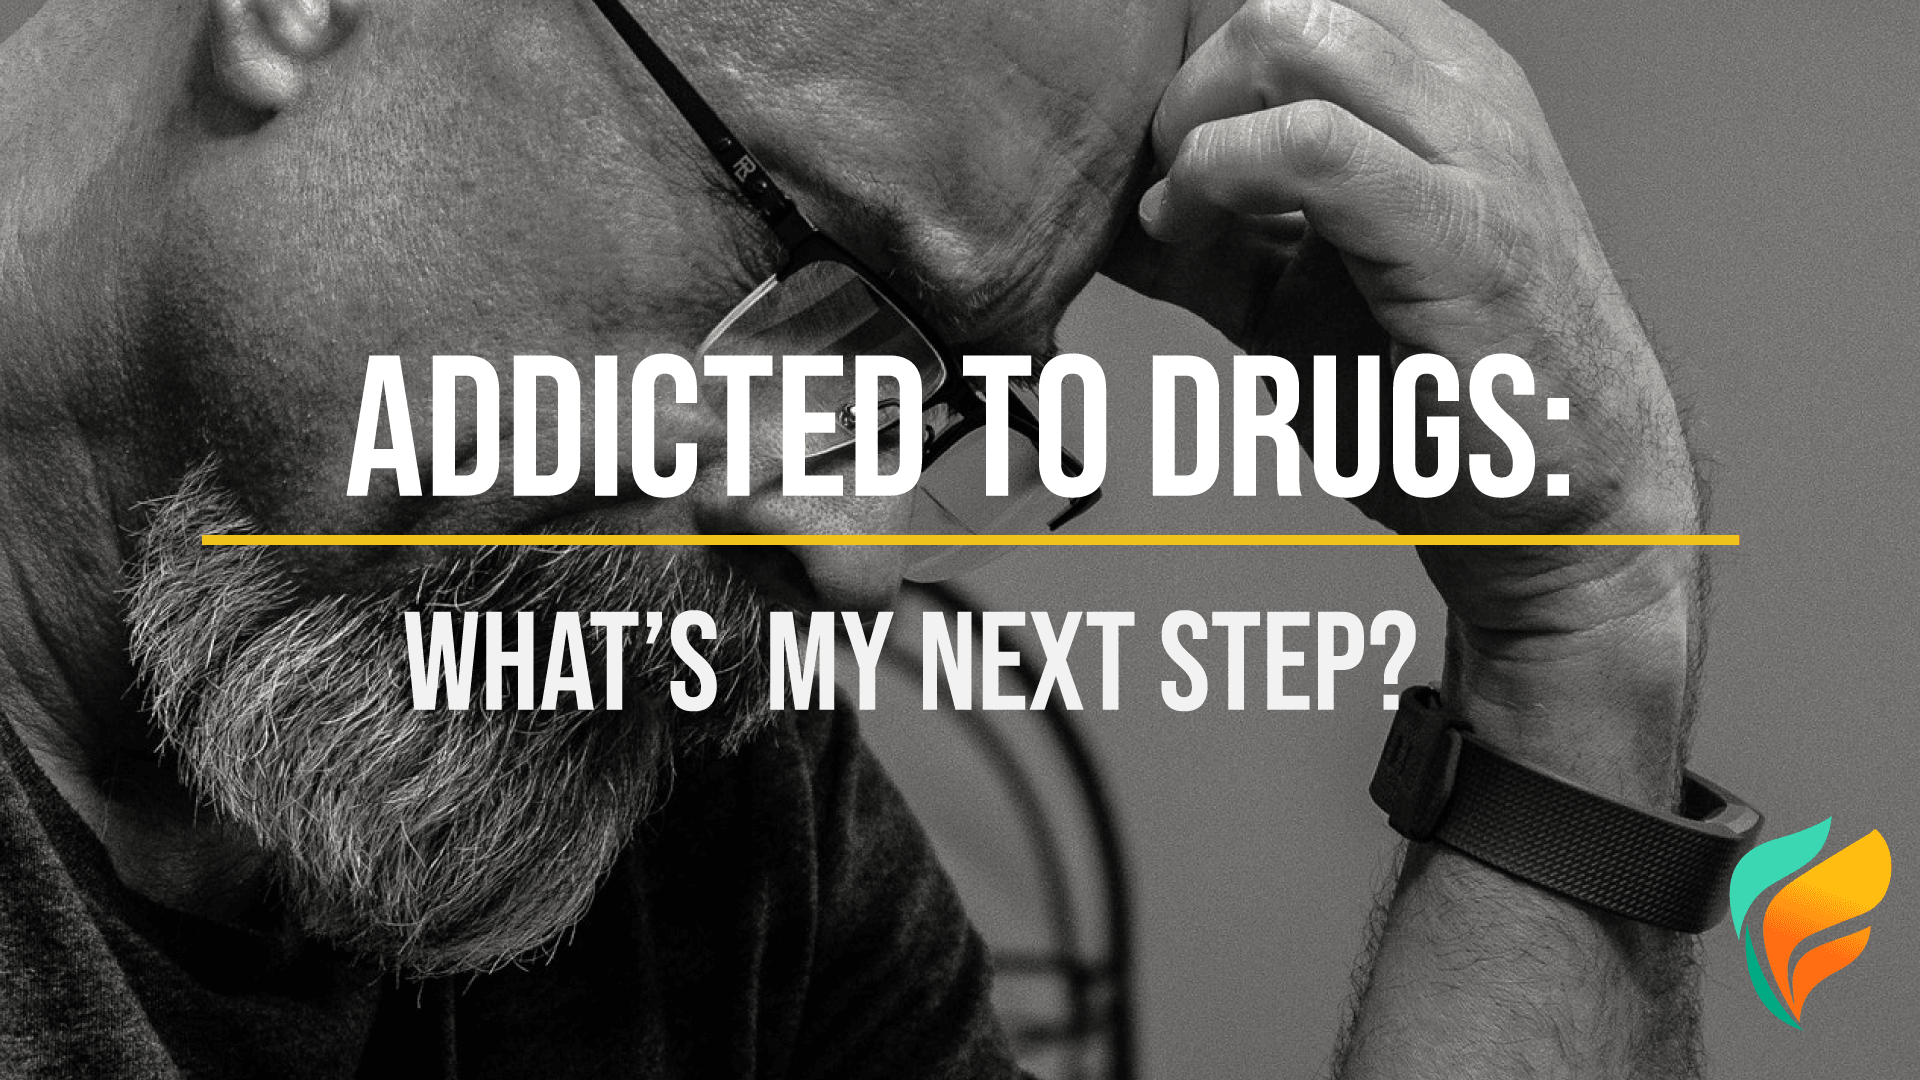 I’m Addicted to Drugs: What Do I Do Next?